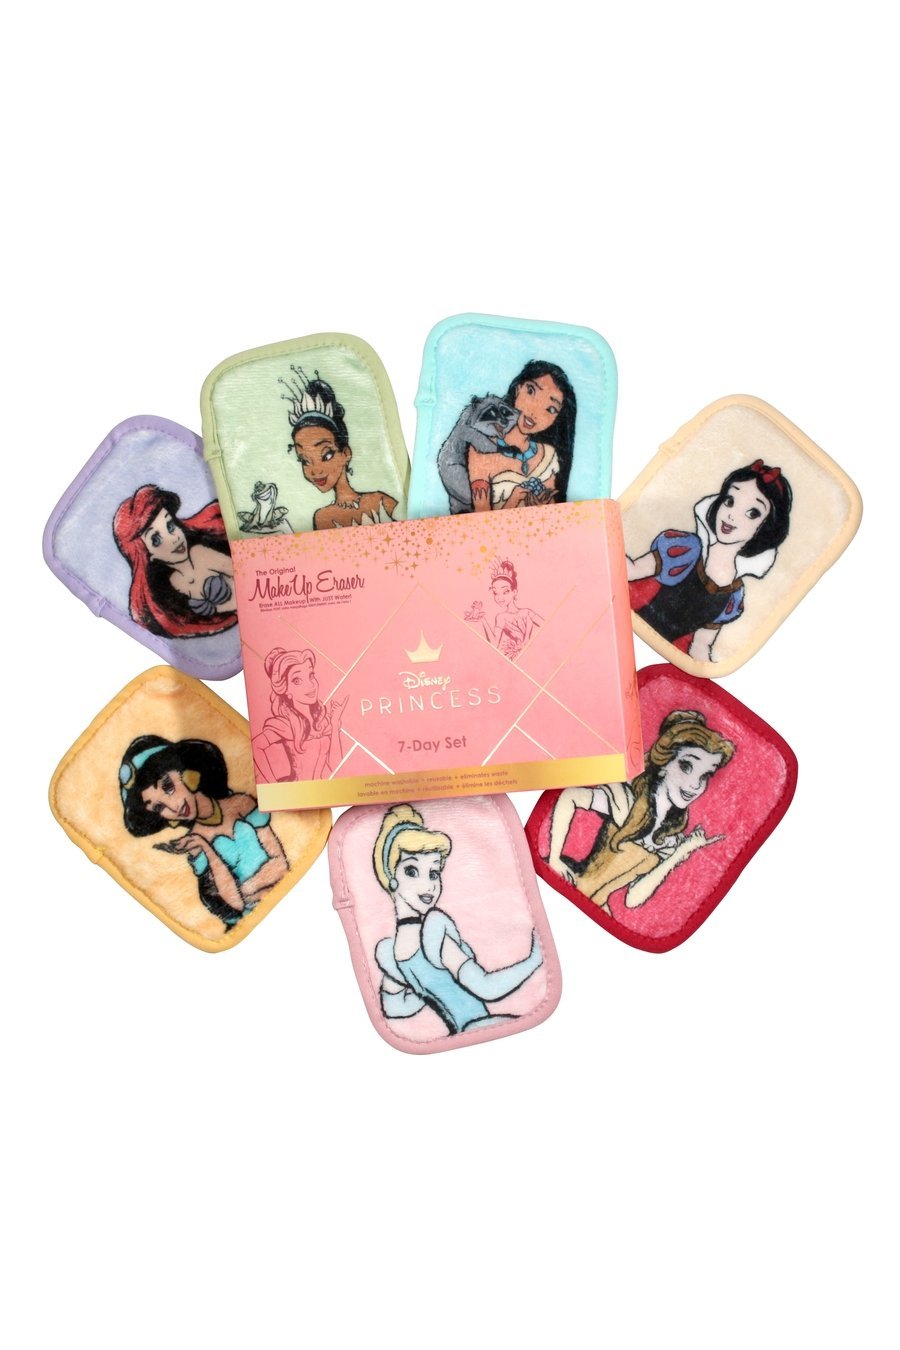 Buy Makeup Eraser Disney Princess 7-Day Set at Spoiled Brat  Online - UK online Fashion &amp; lifestyle boutique